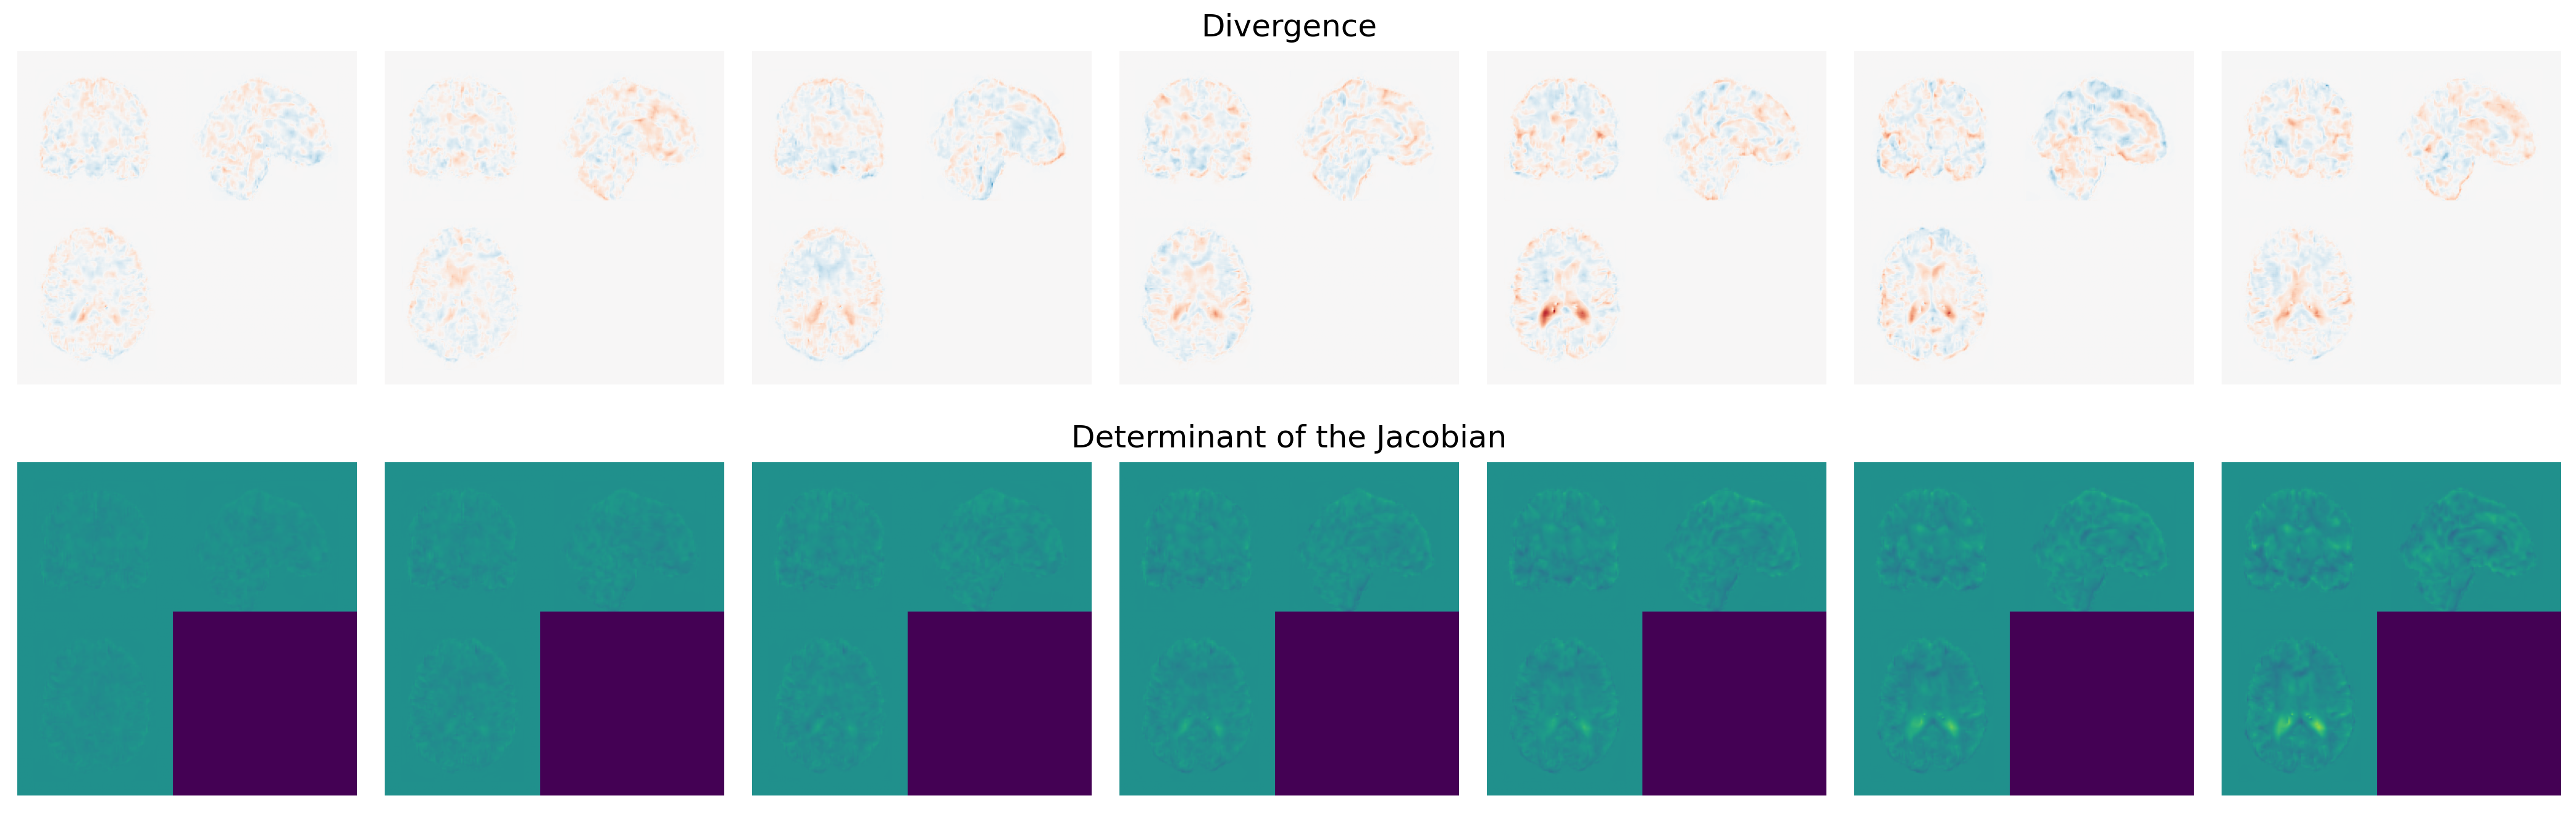 Divergence and Jacobi Determinant